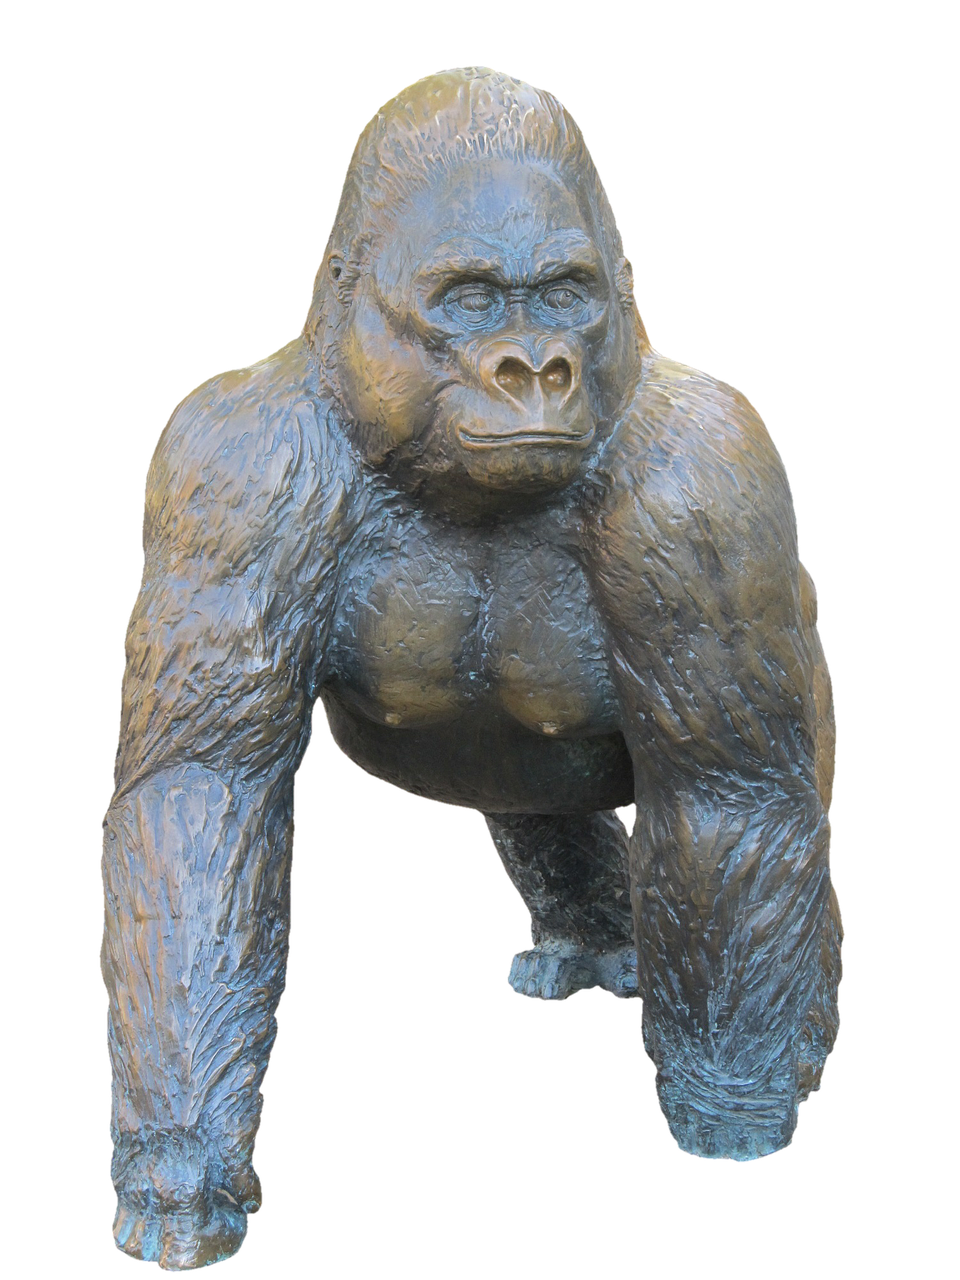 Image - gorilla monkey ape figure